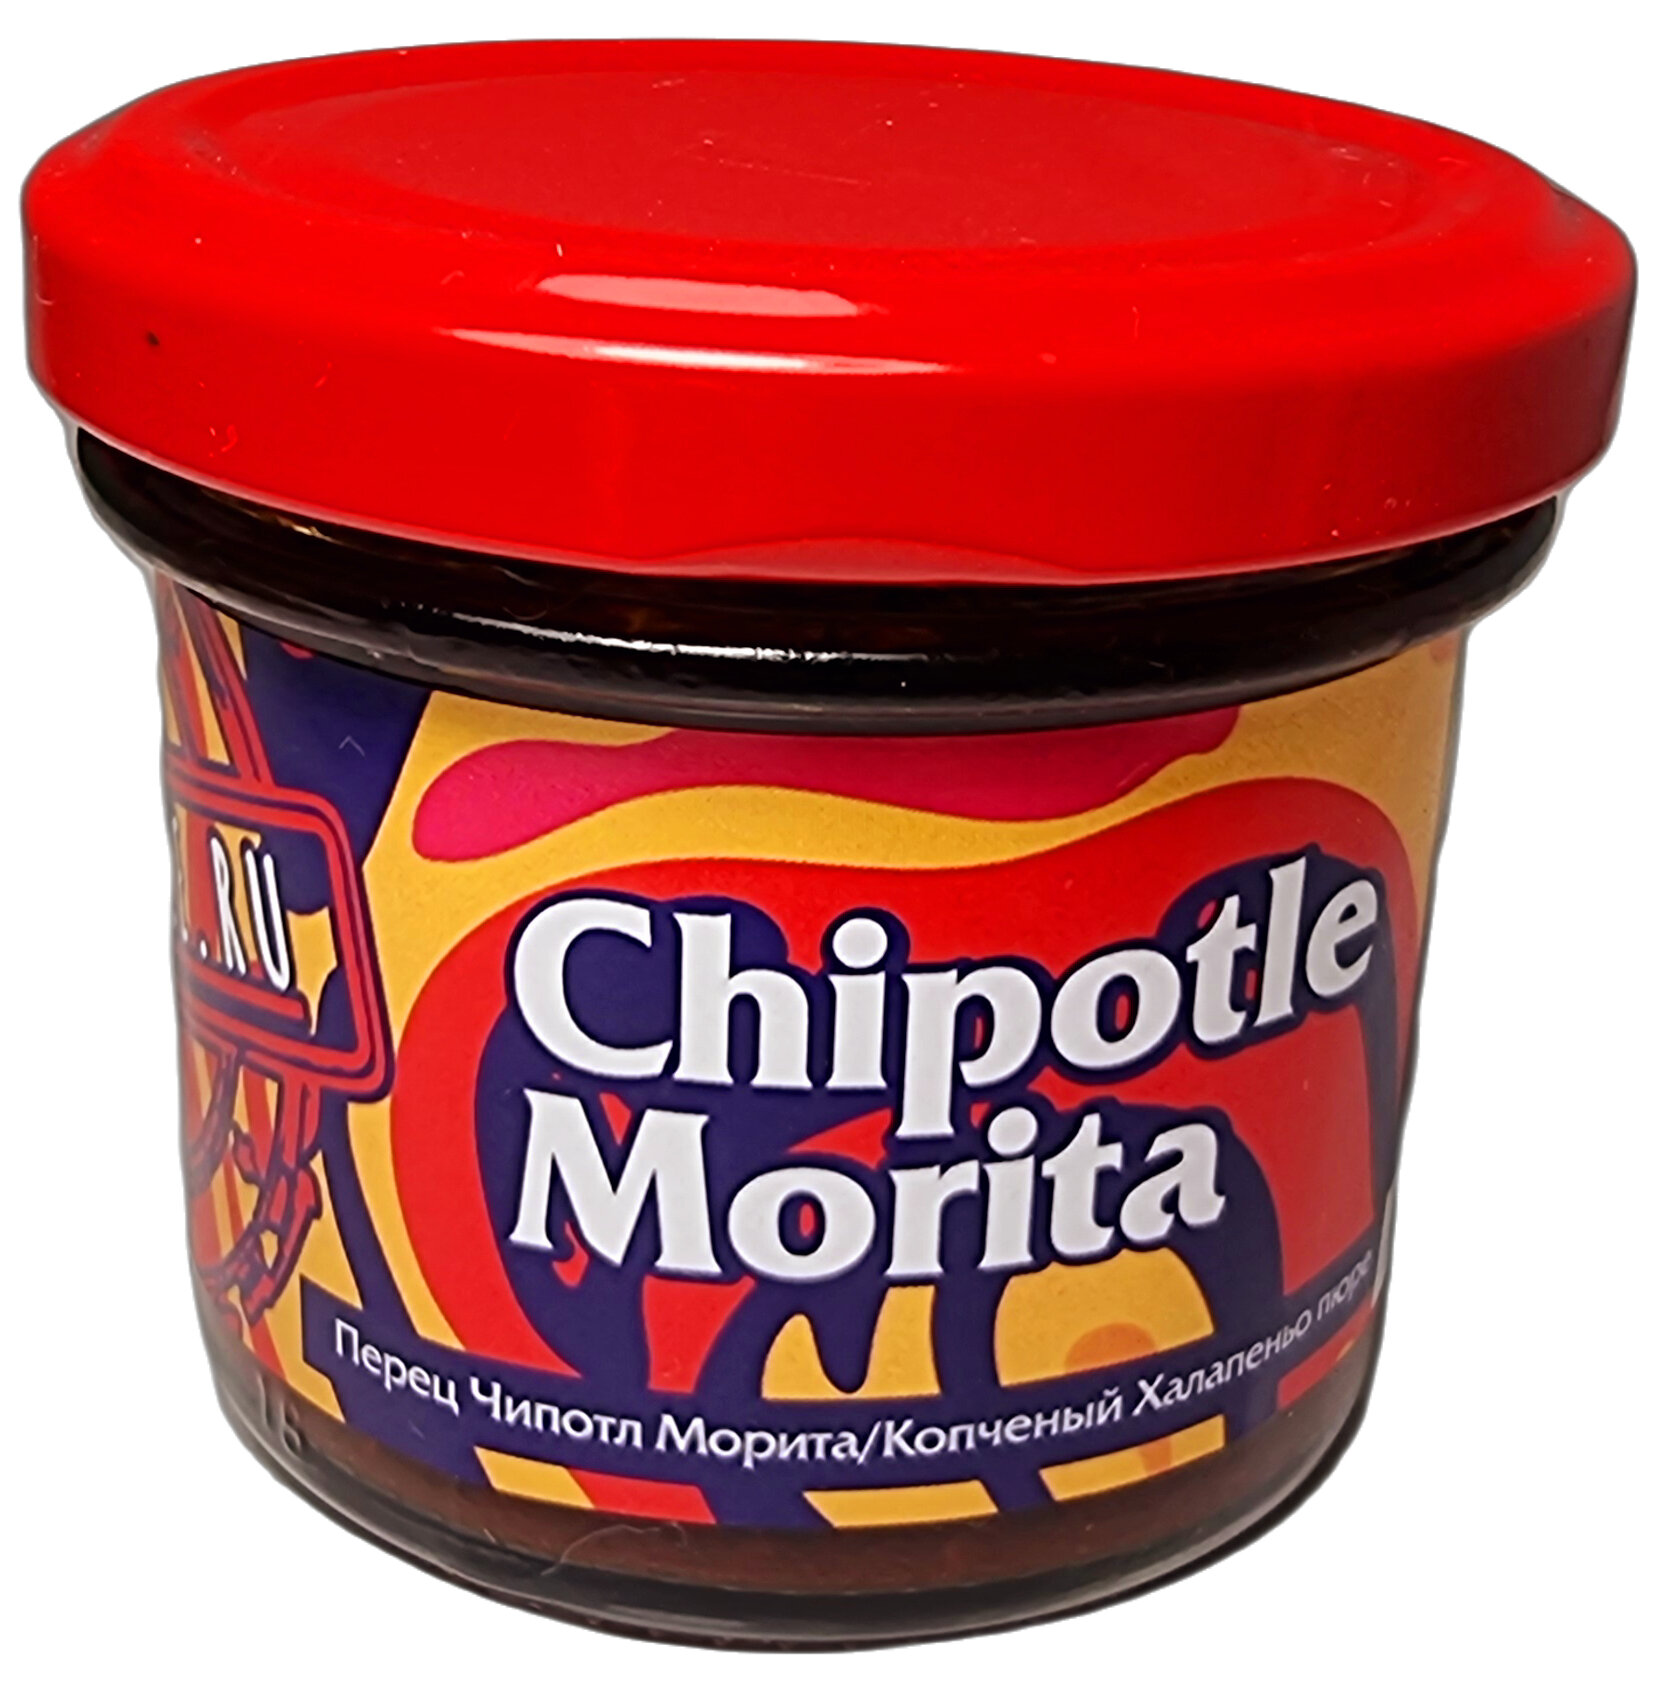 Чипотле Морита (копченый халапеньо) пюре / Chipotle Morita Pepper Mash